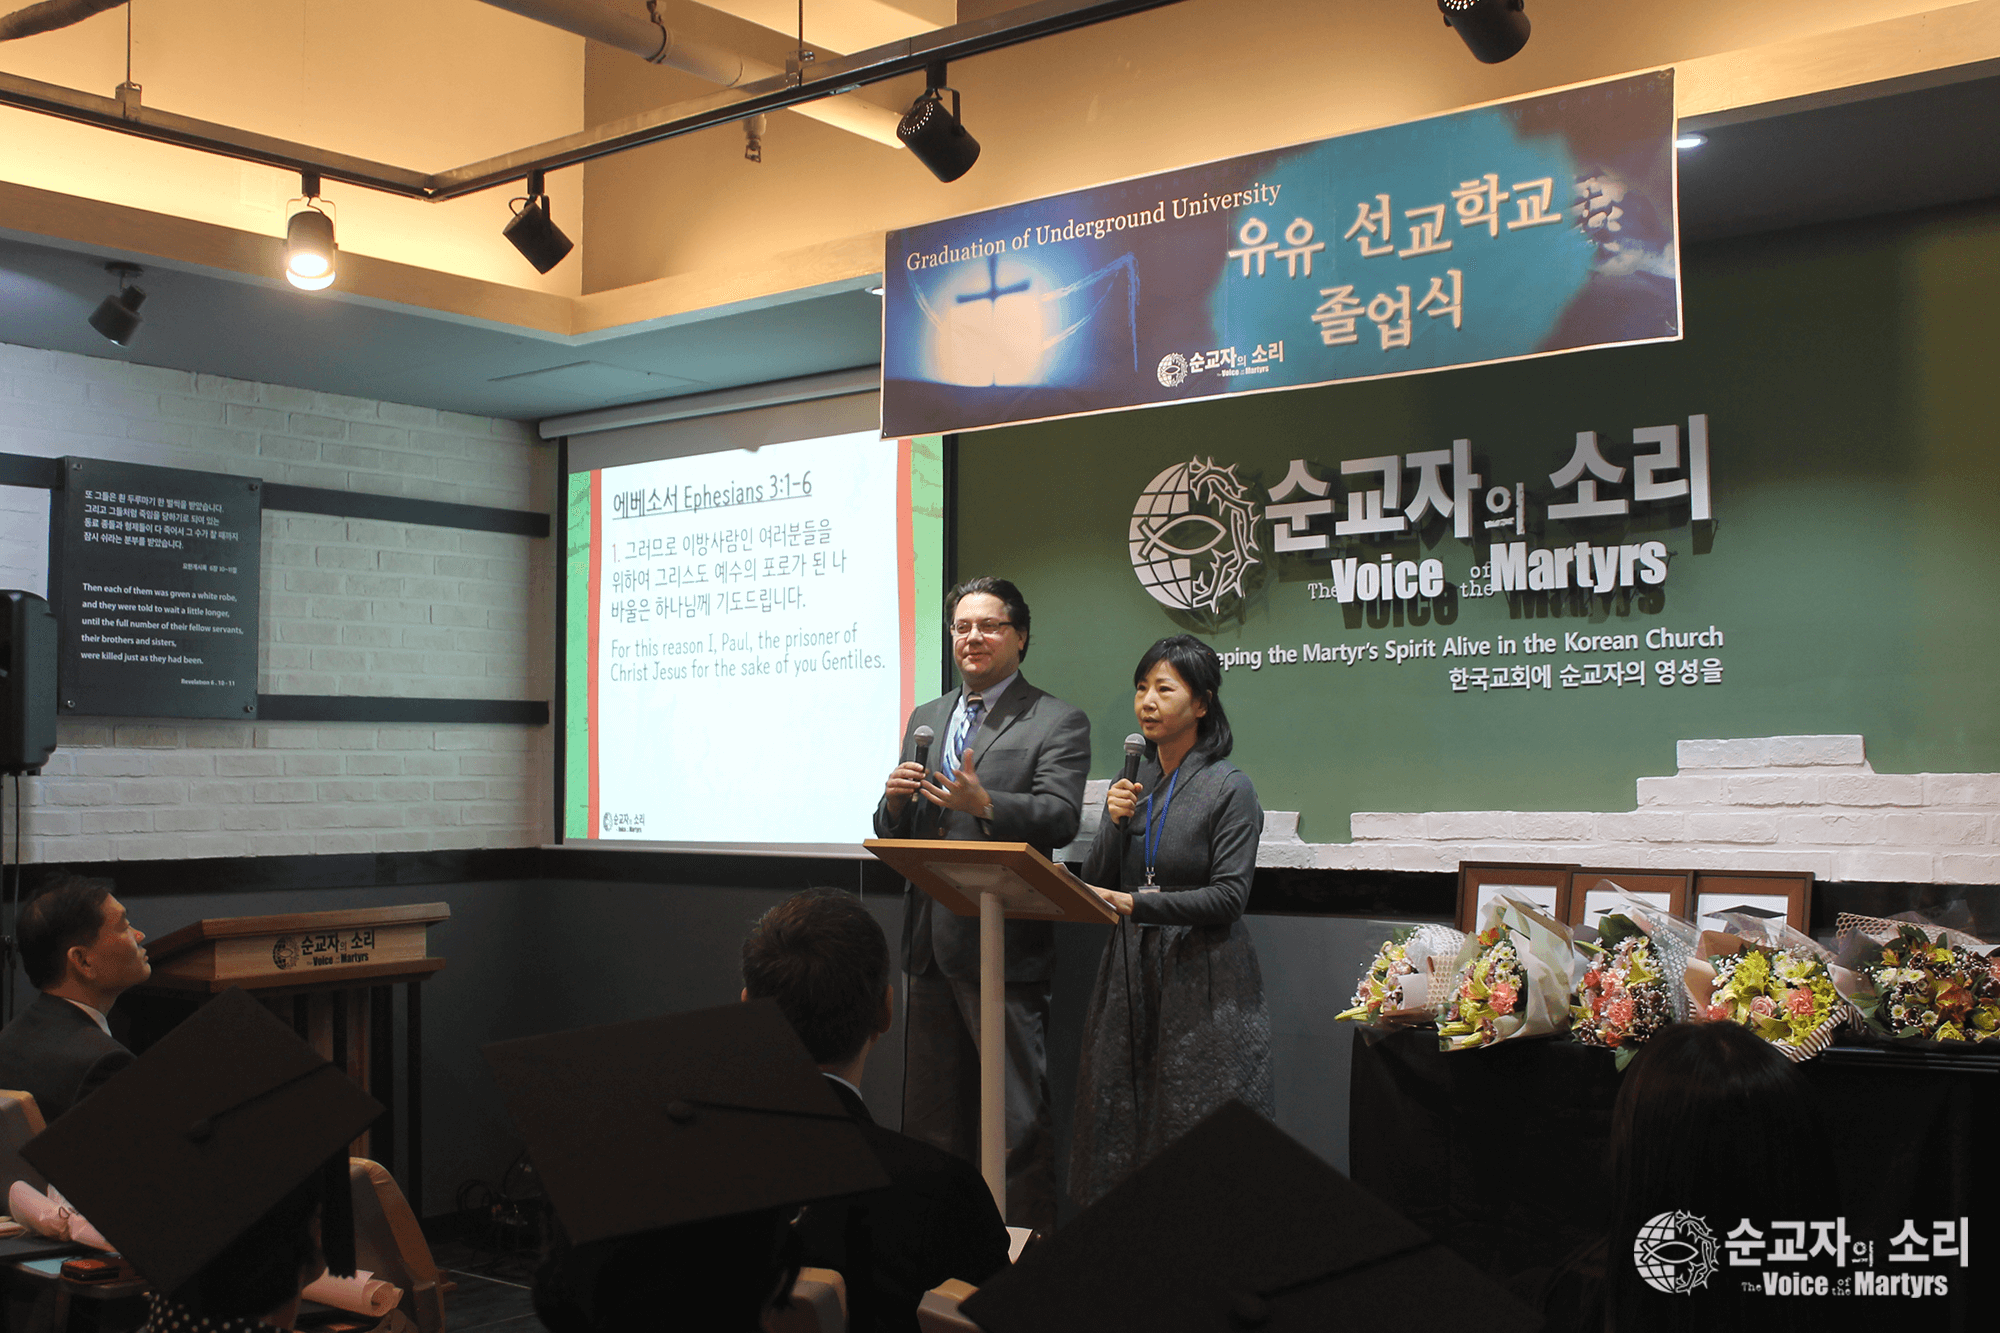 NORTH KOREAN DEFECTORS GRADUATE FROM MISSIONARY TRAINING PROGRAM PATTERNED ON UNDERGROUND NORTH KOREAN CHURCH